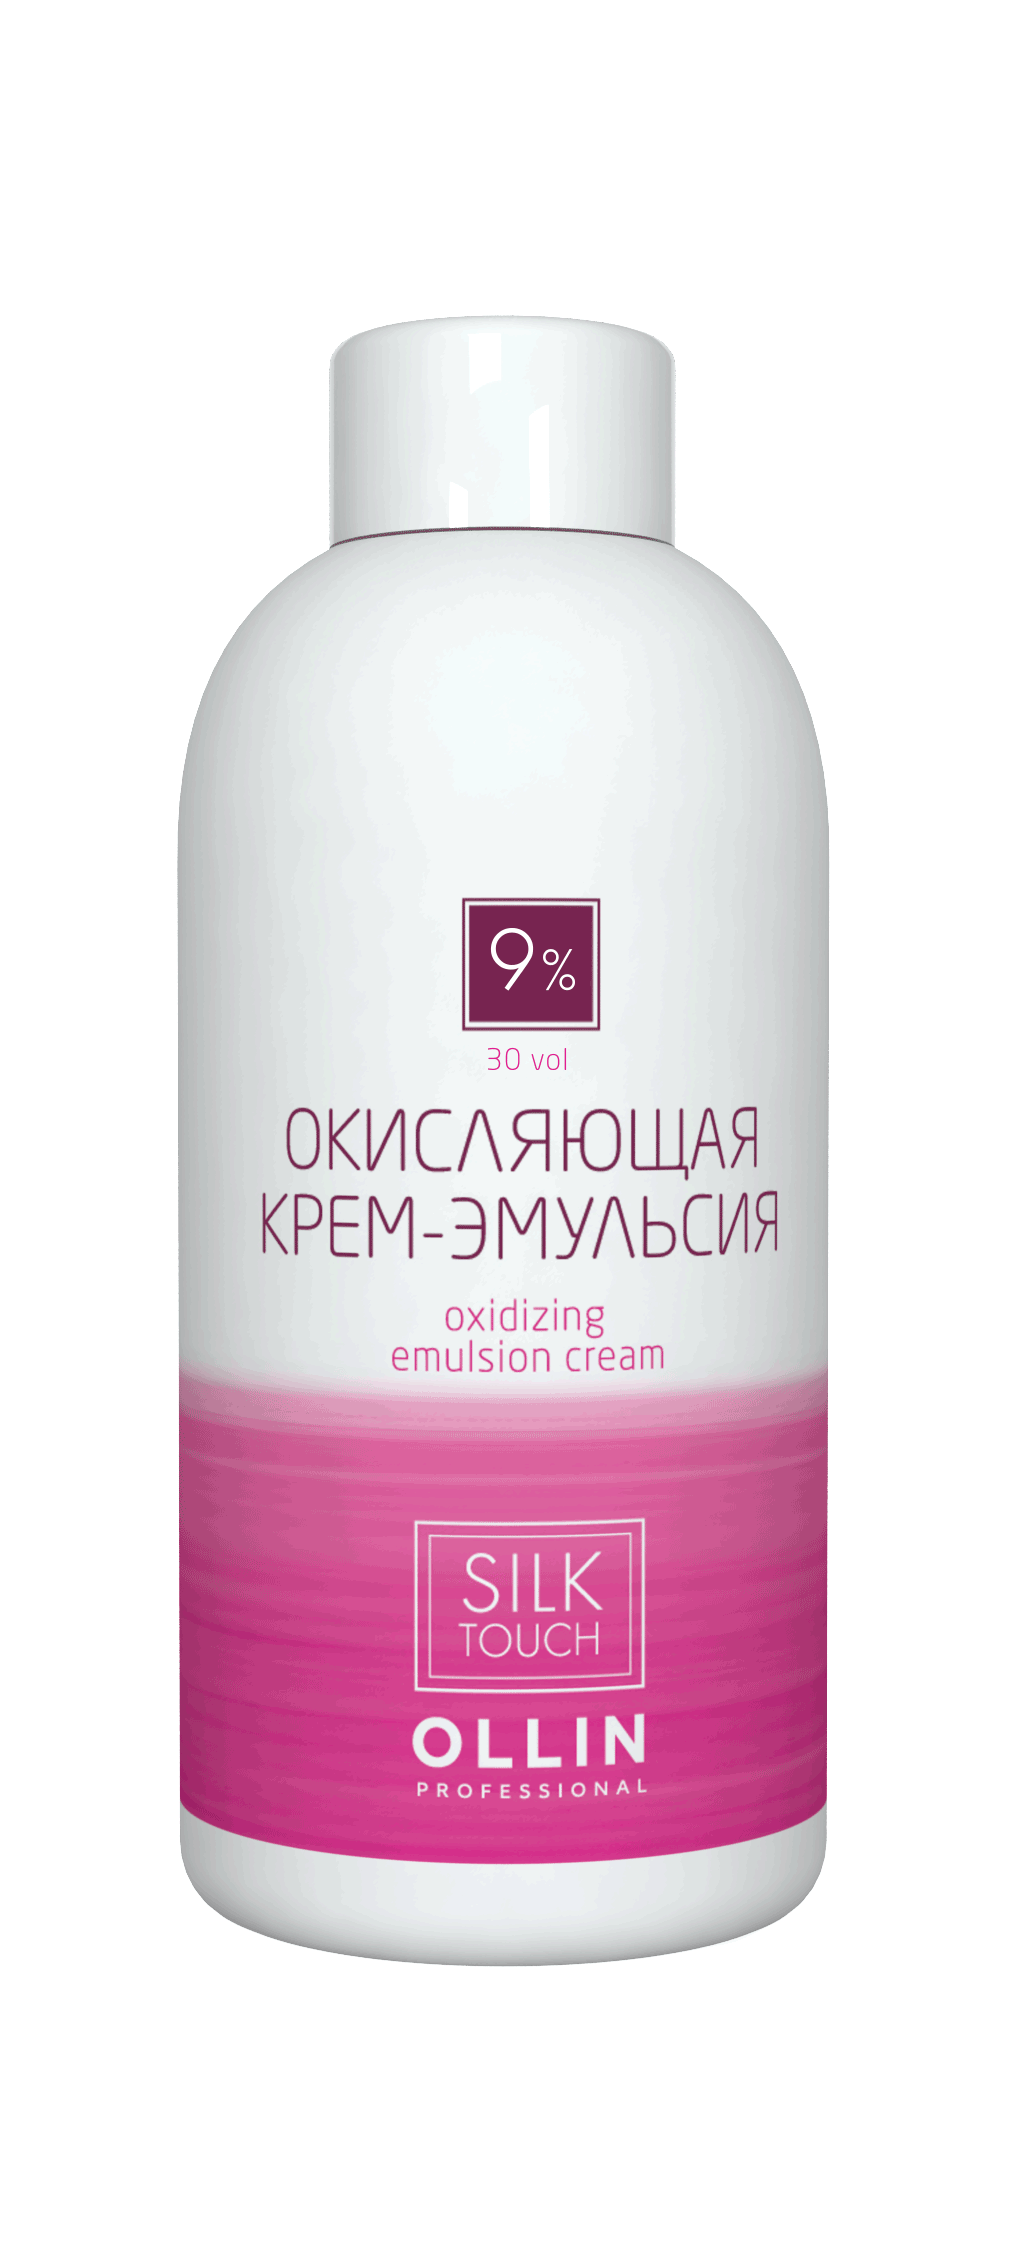 OLLIN silk touch.  МИНИ 9% 30vol. Окисляющая крем-эмульсия 90мл